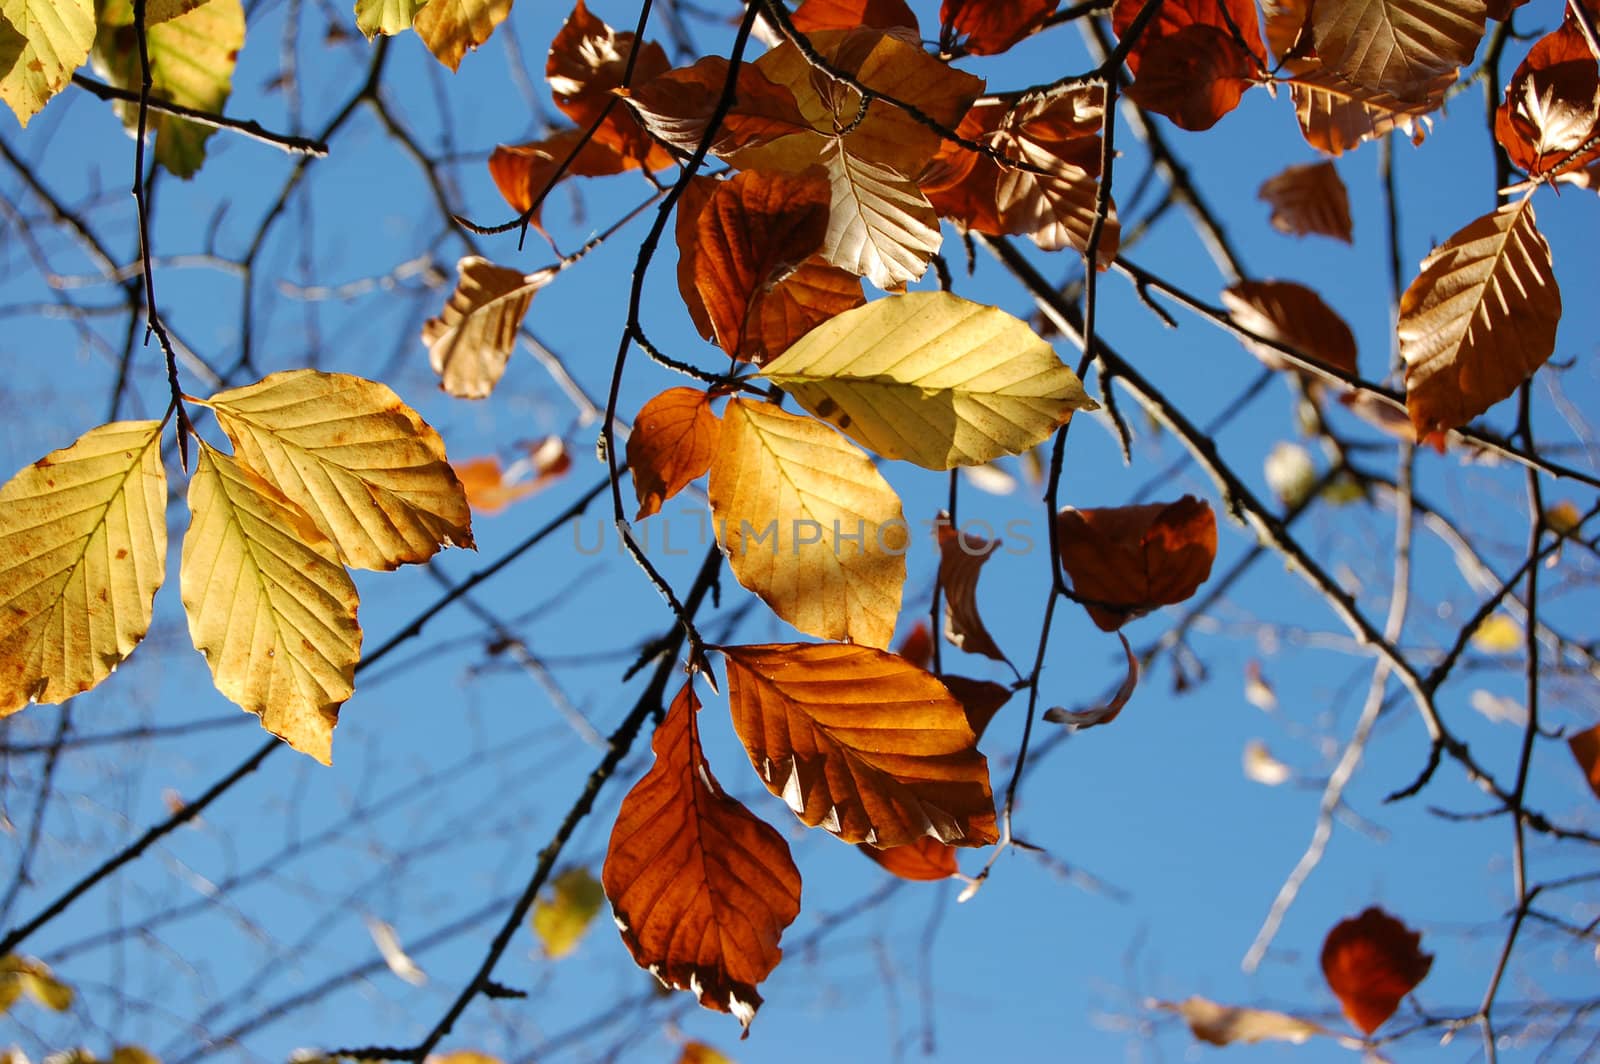 Golden beech leaves in the sunlight against a blue sky